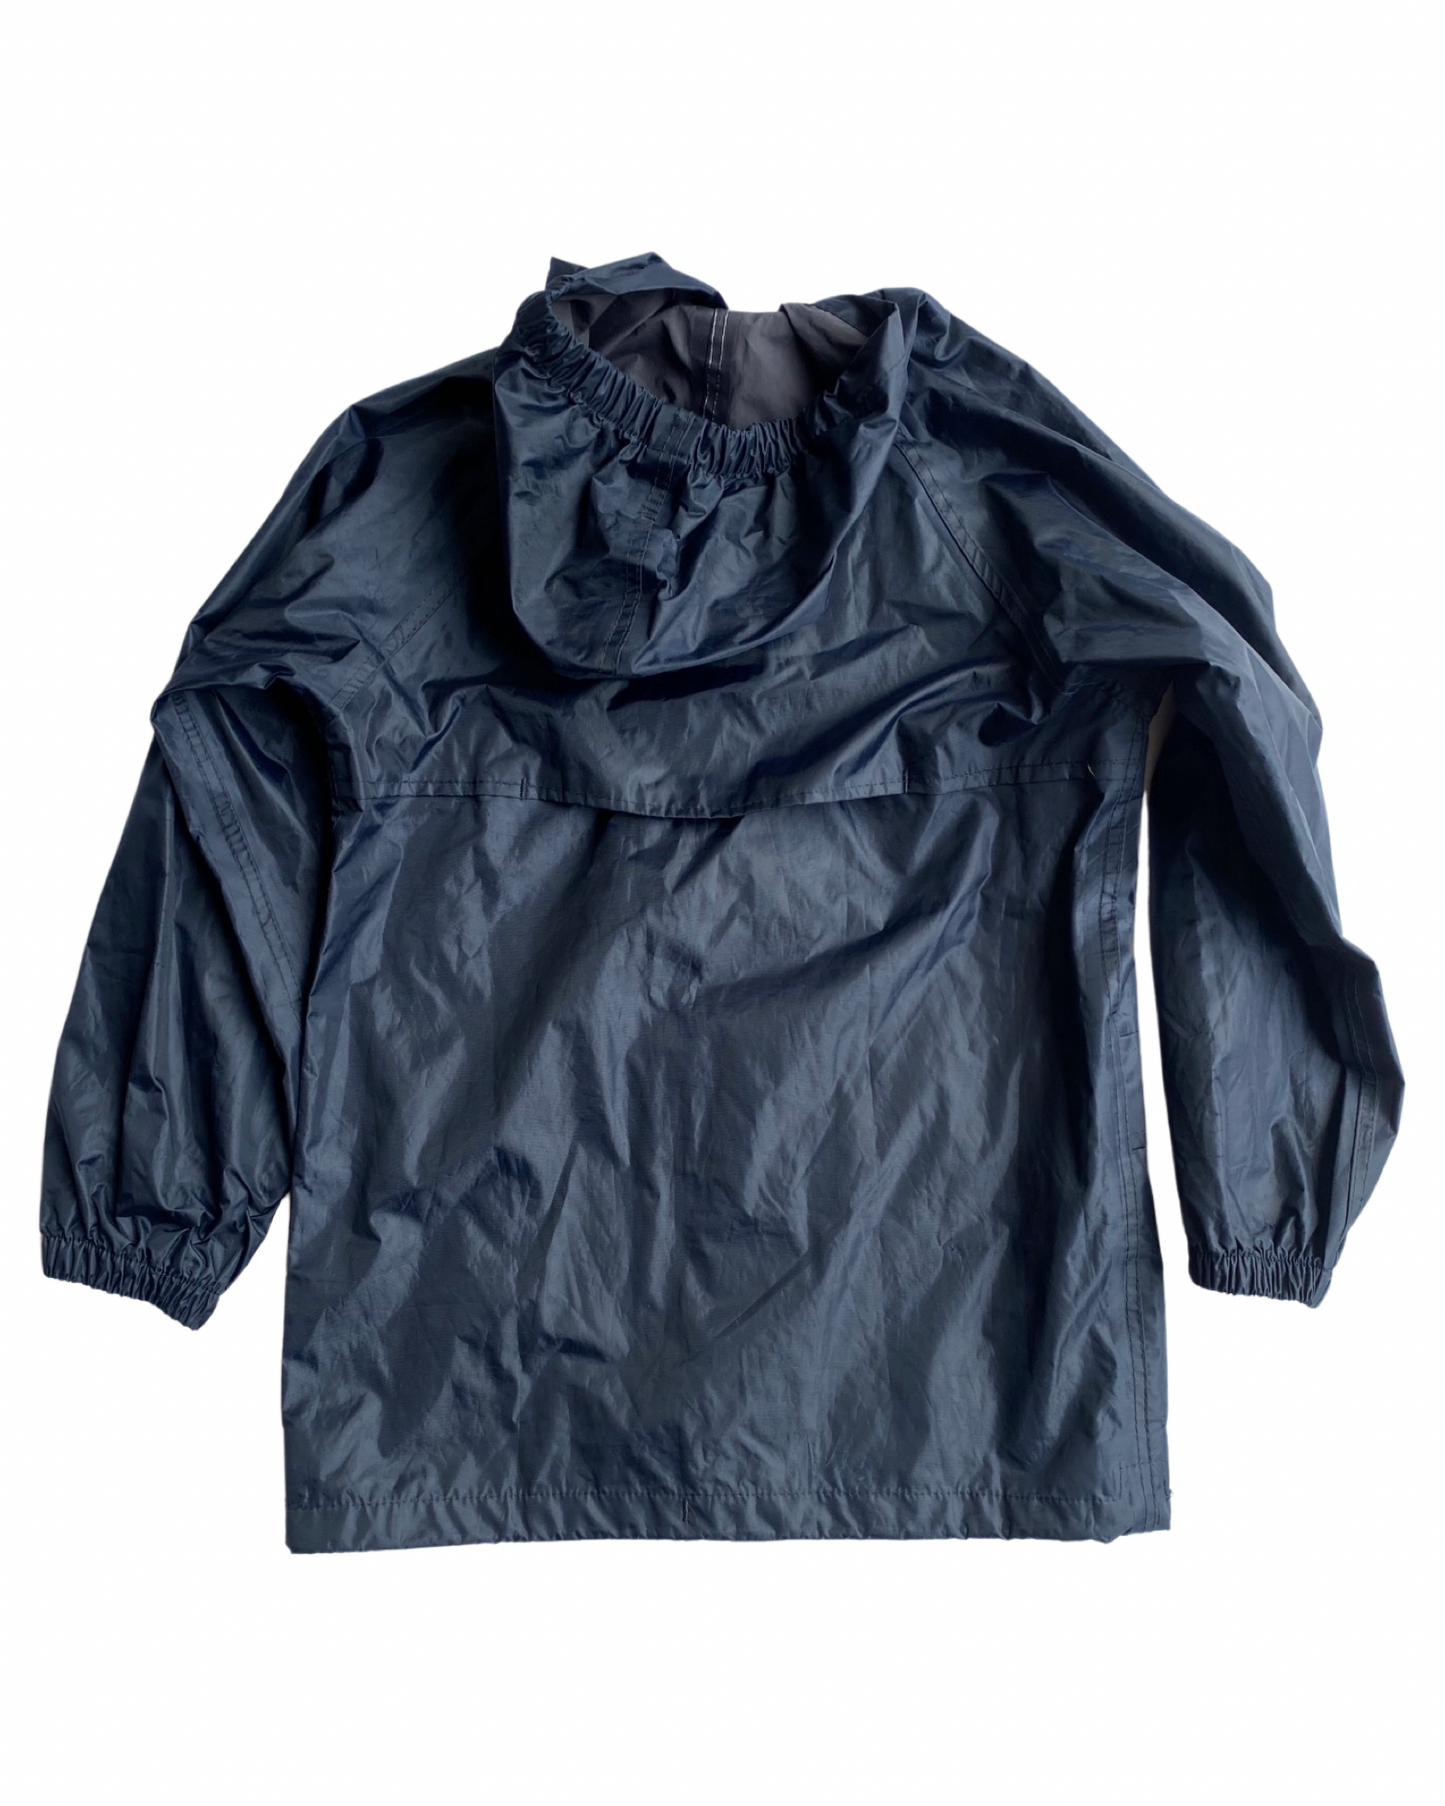 Regatta navy waterproof rain jacket (7-8yrs)